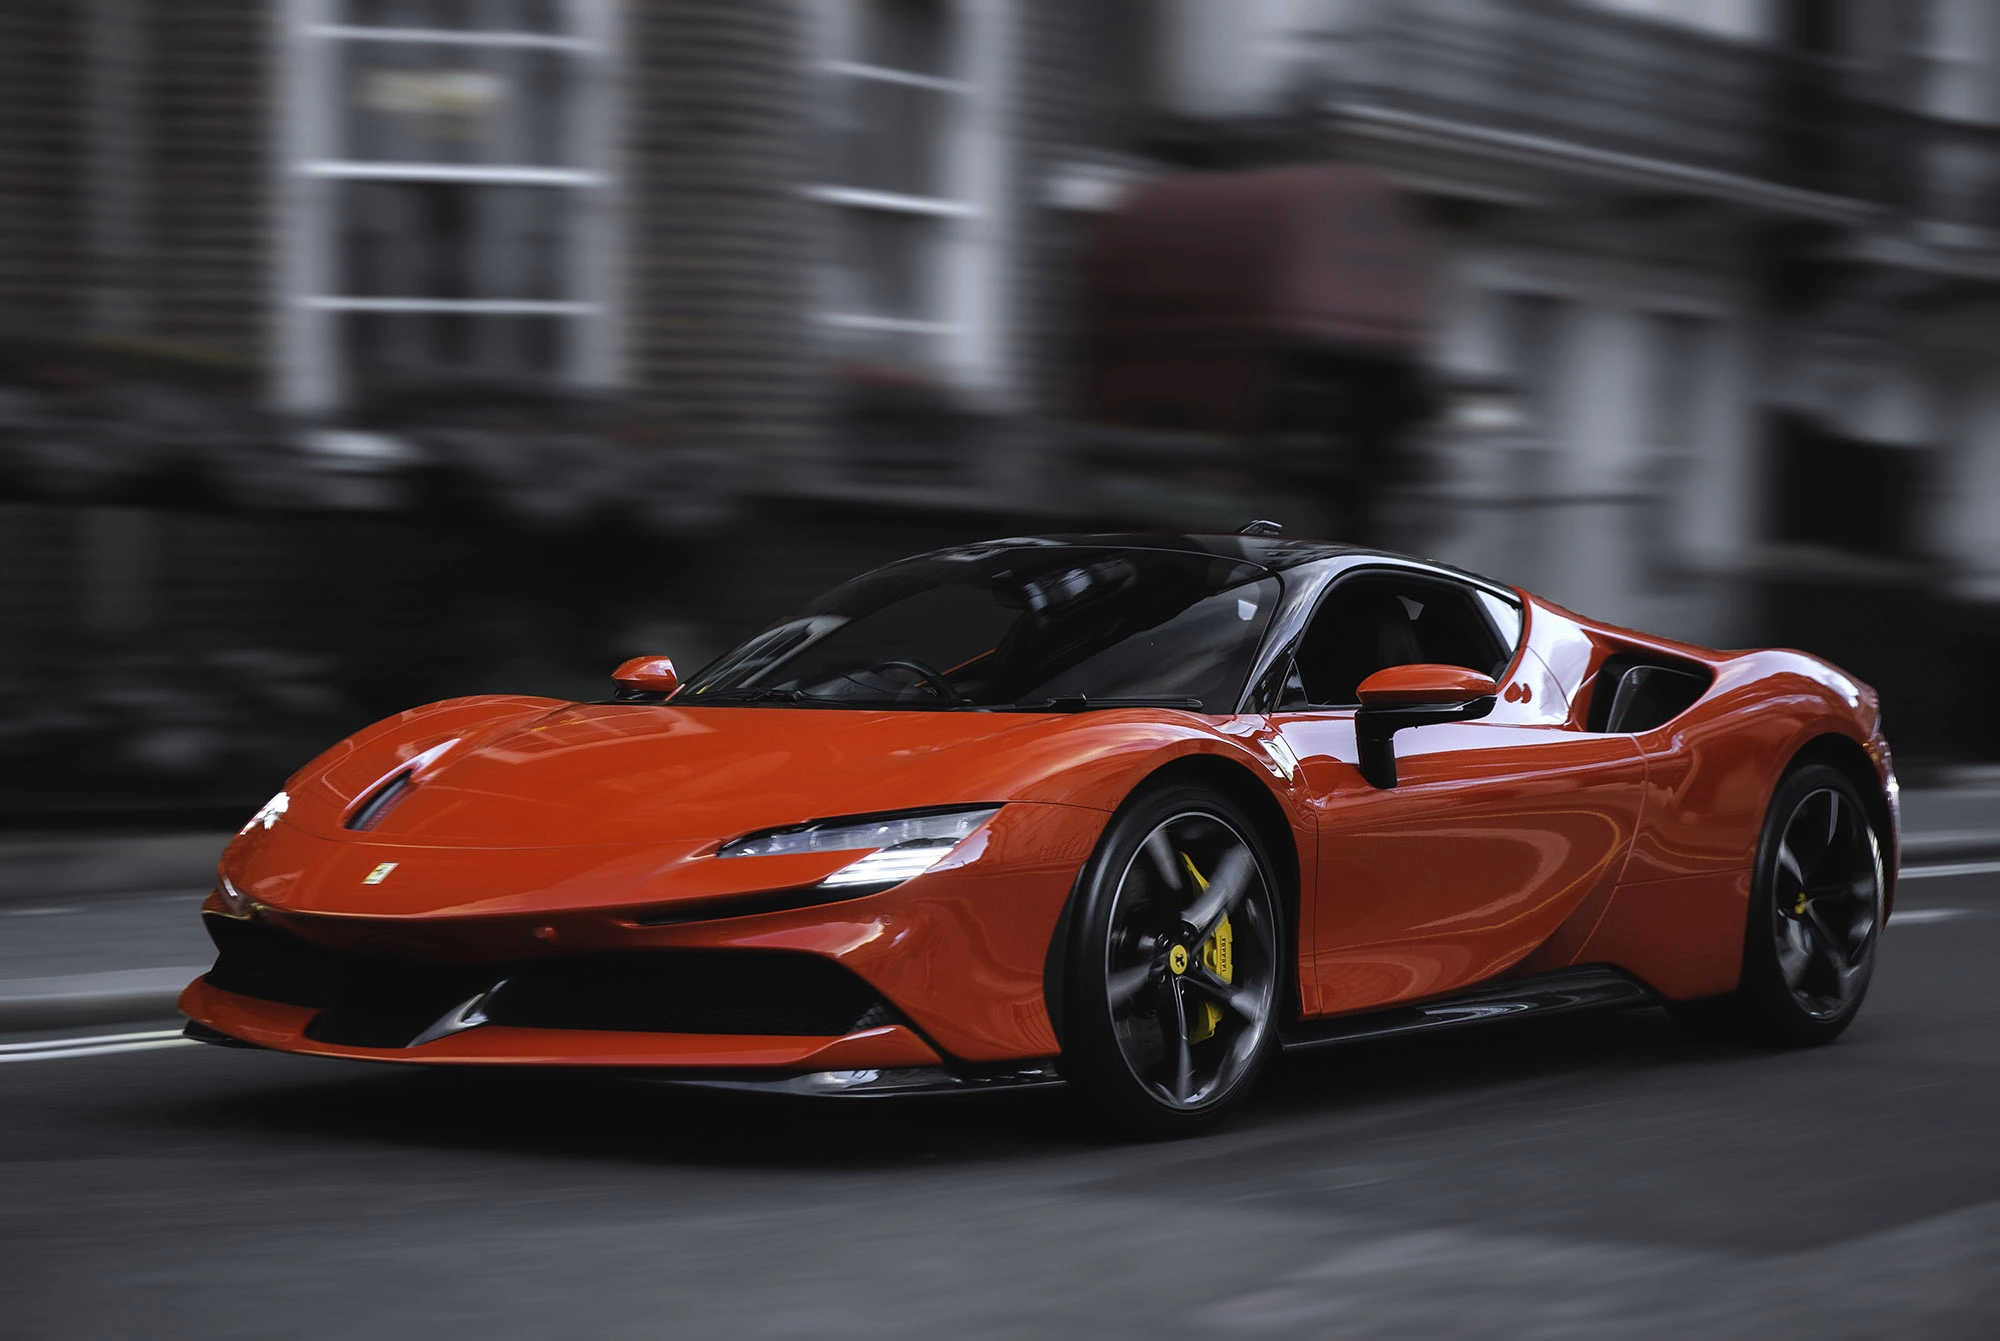 Ferrari rouge dans les rues de Londres 